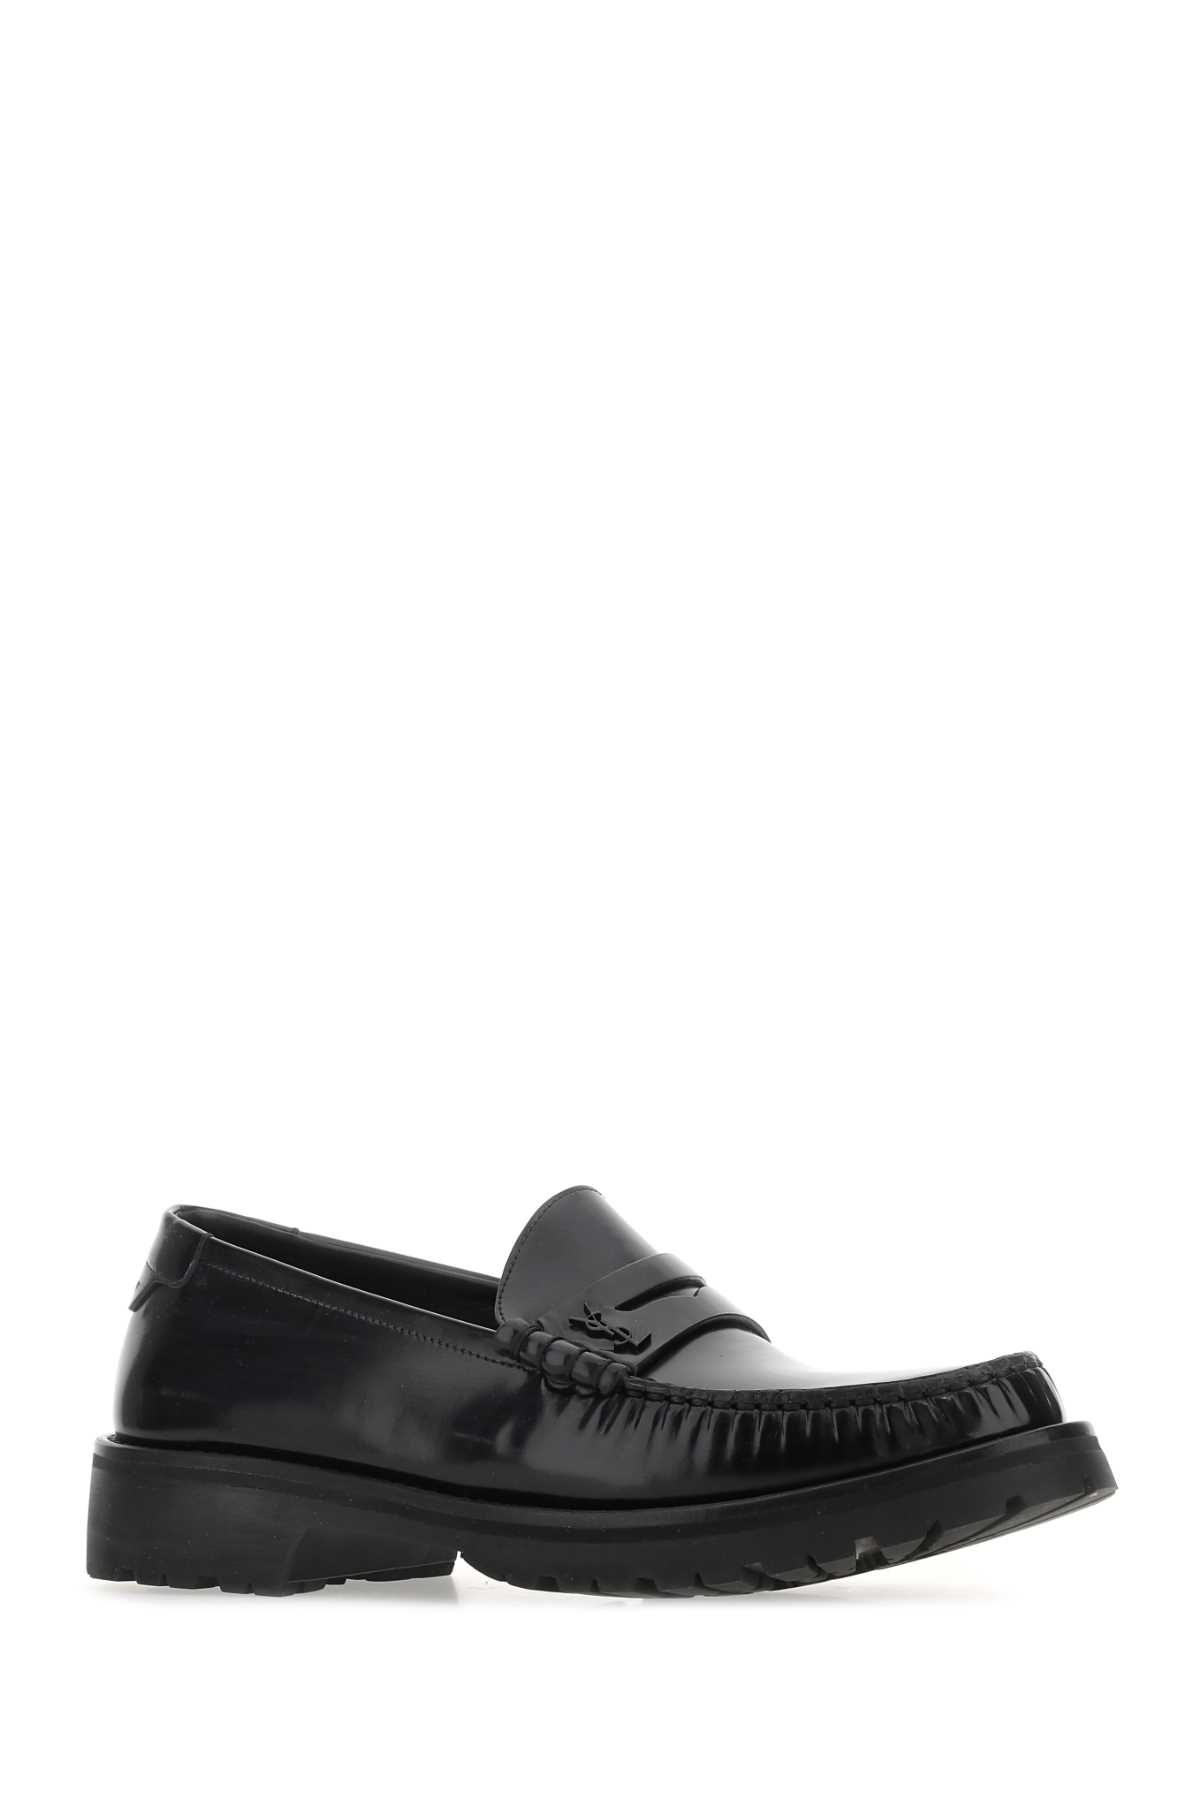 Shop Saint Laurent Black Leather Le Loafers Loafers